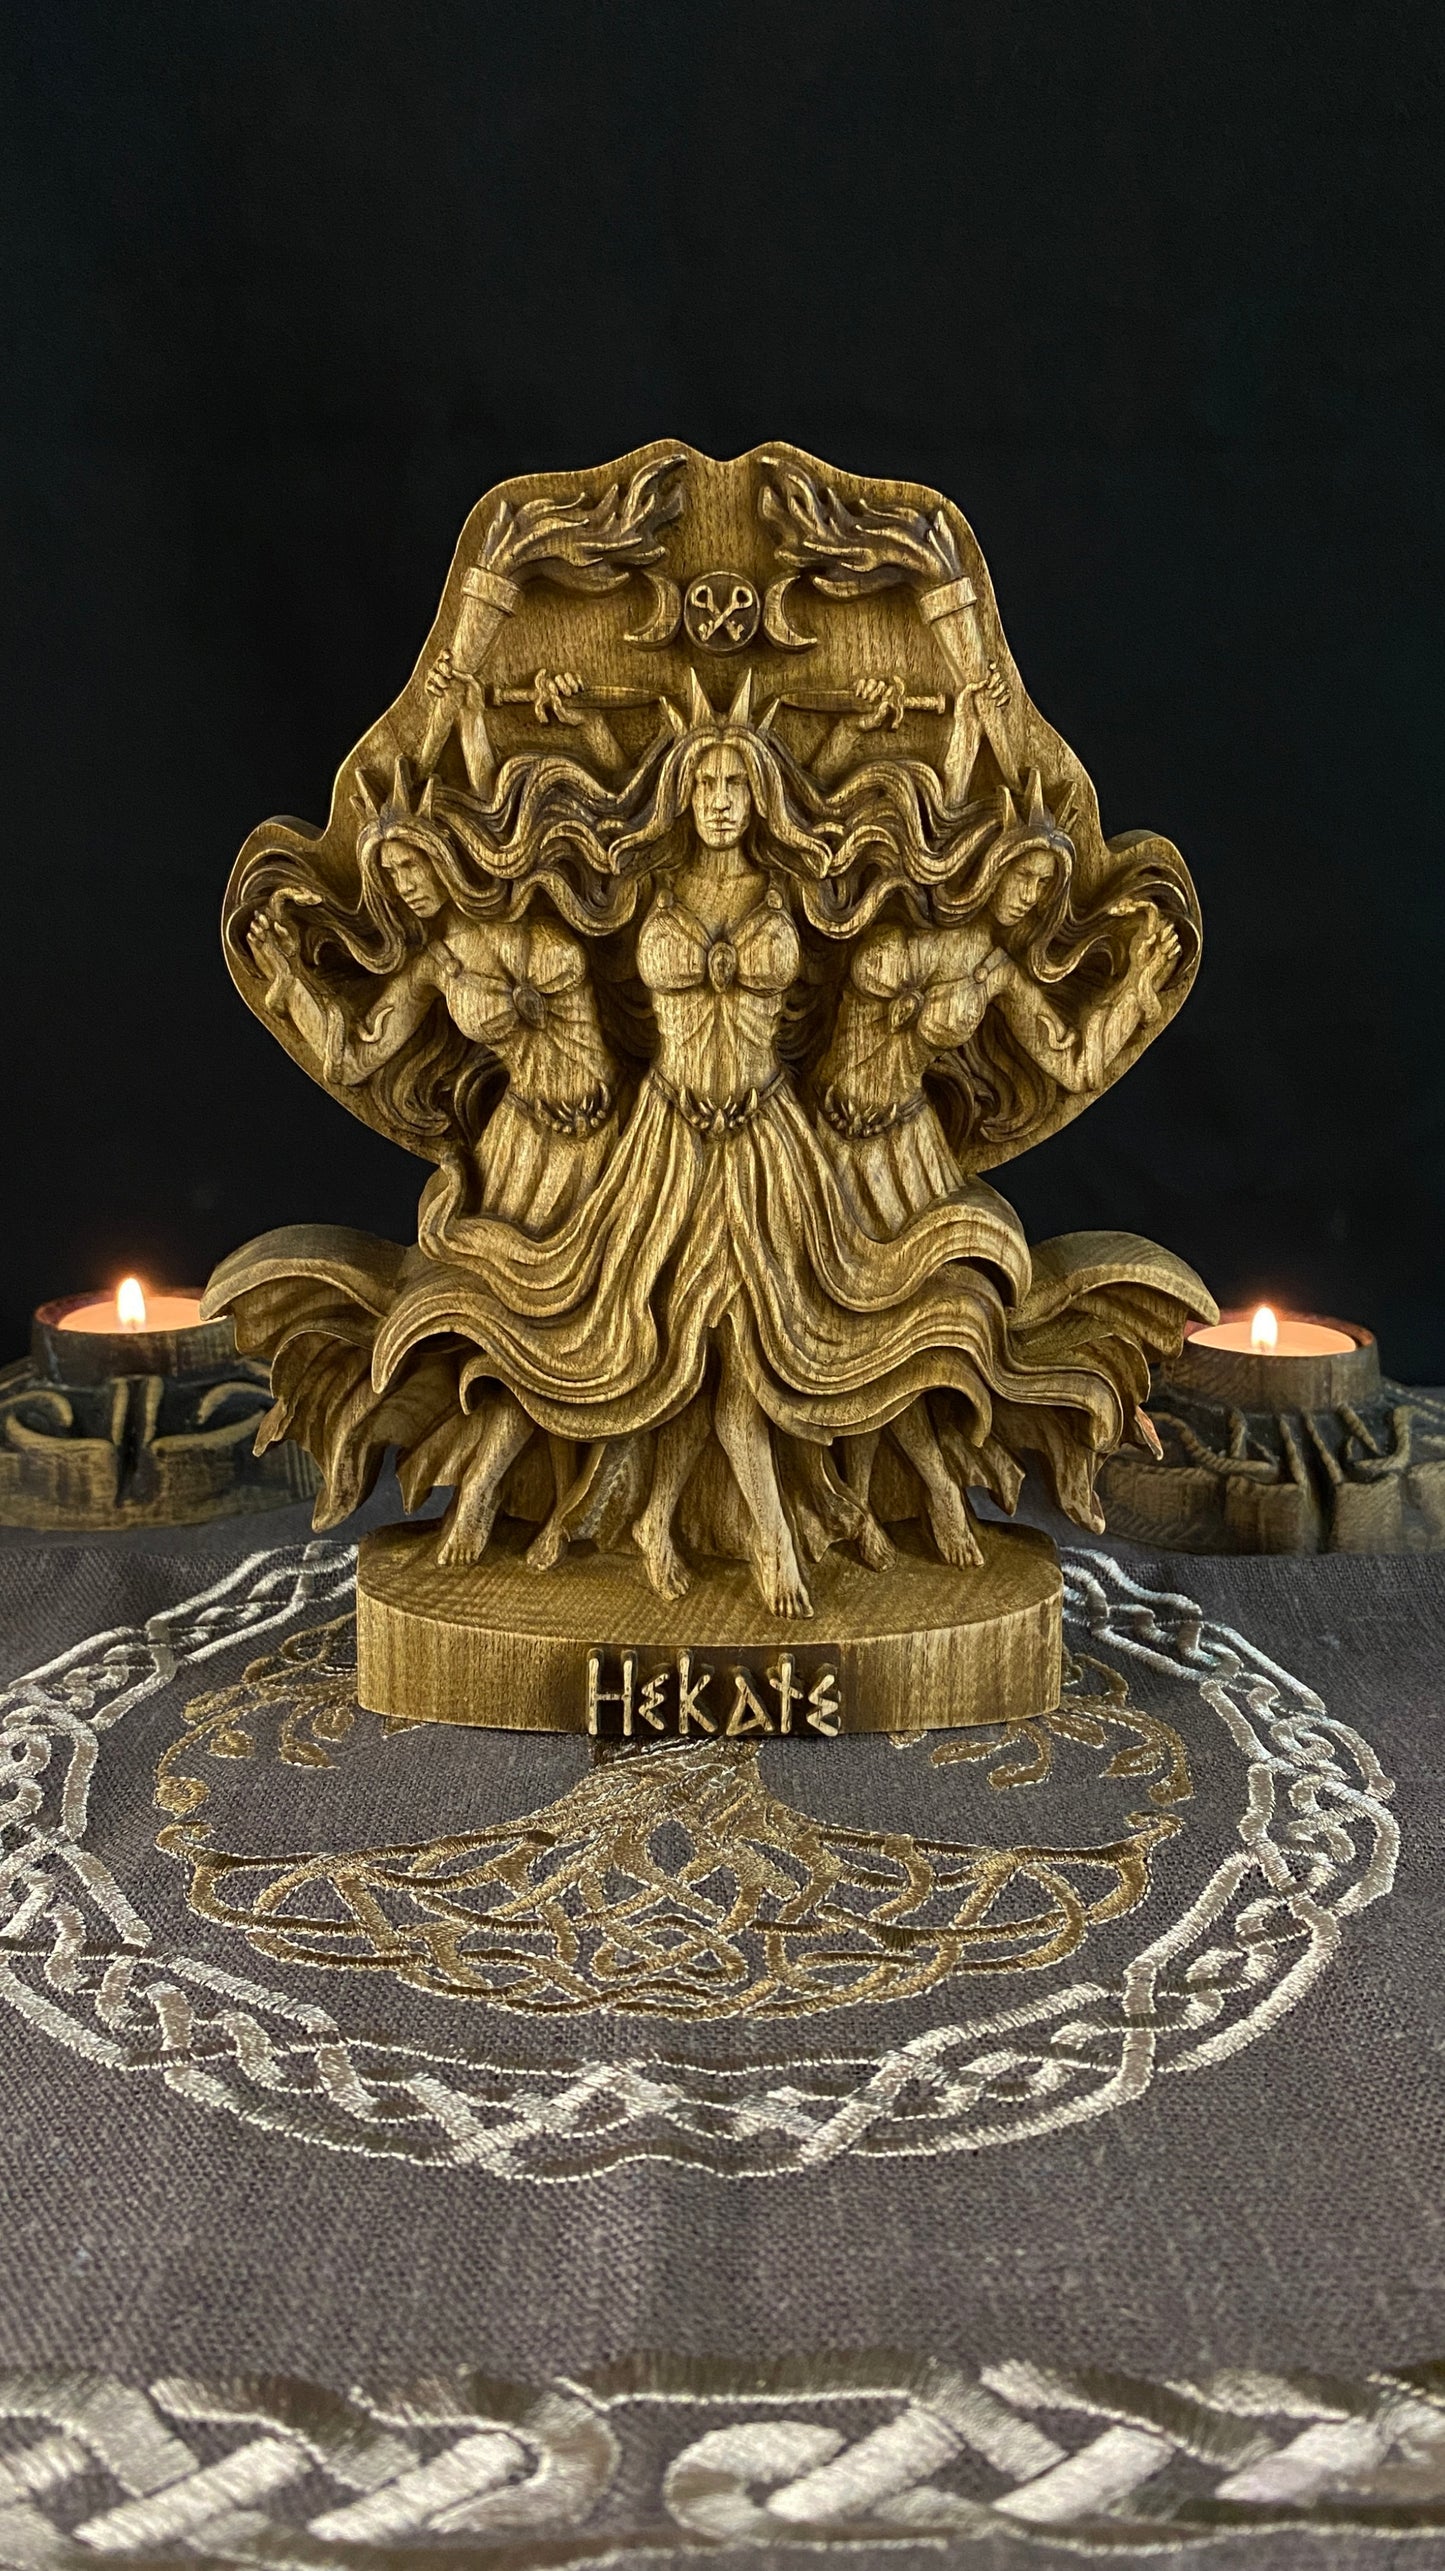 Hecate statue Triple goddess statue Hecate altar Altar statue Greek god statue Ancient greek Hecate gooddess Witchcraft Greek mythology art